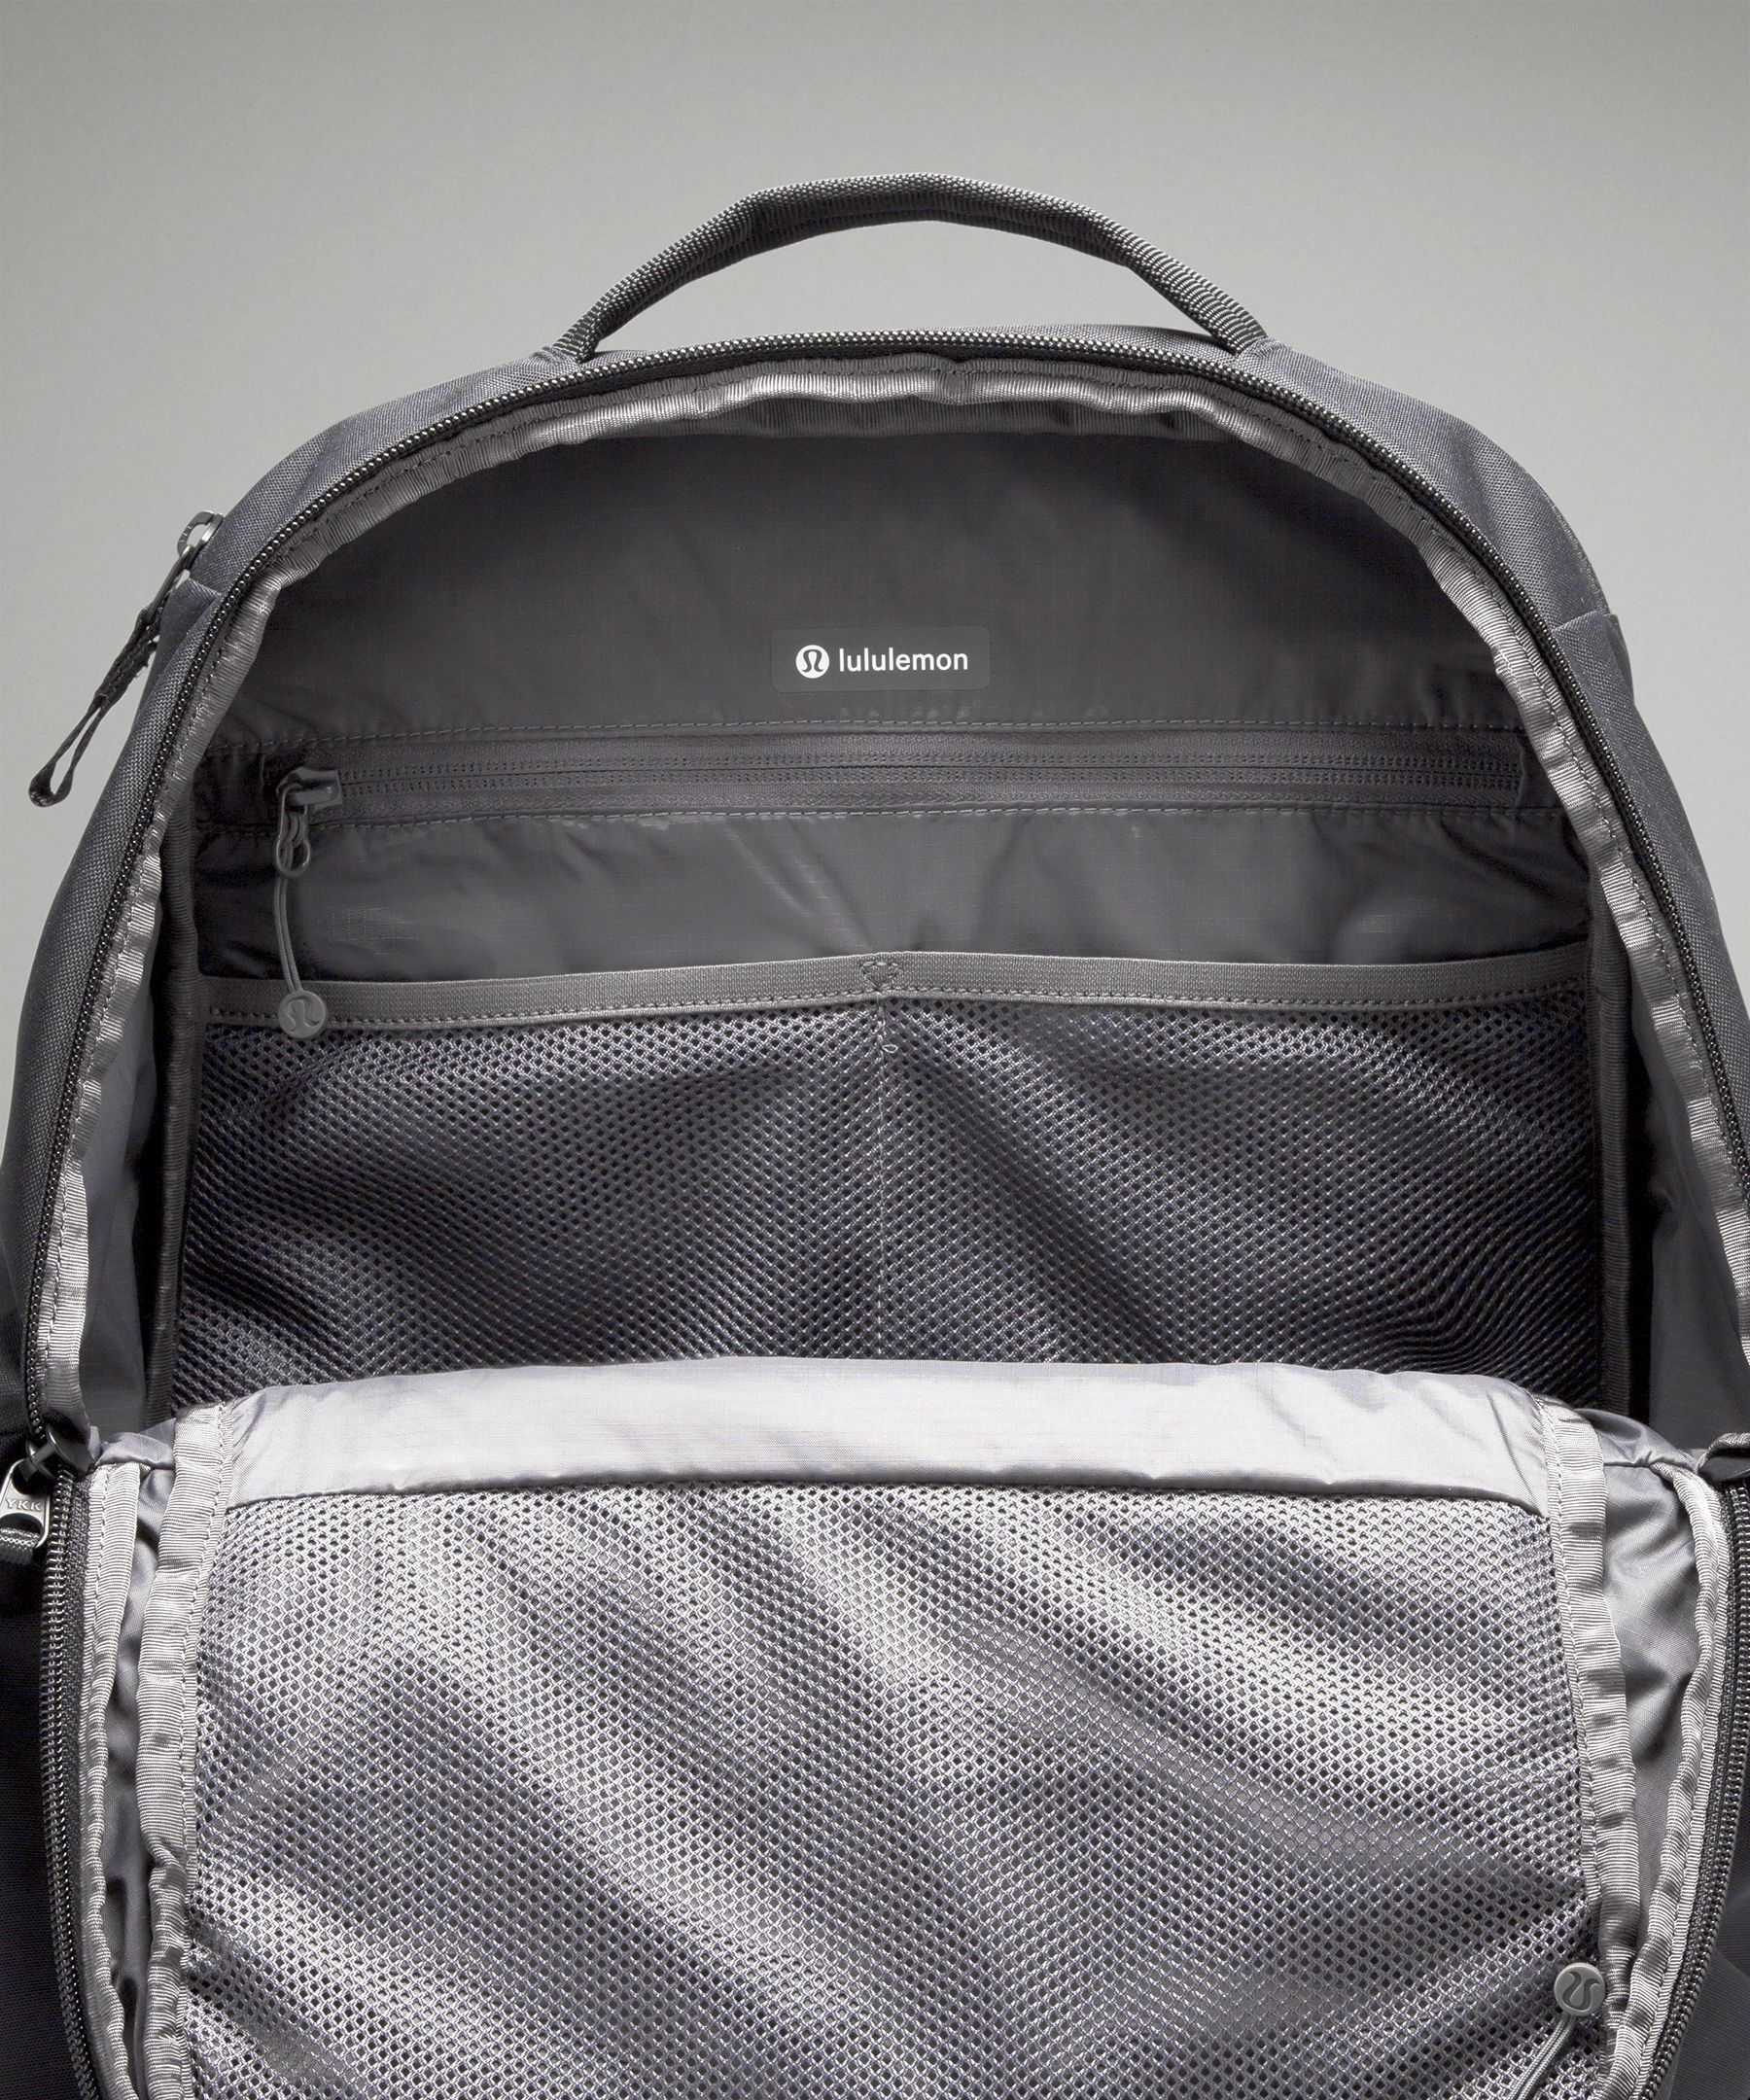 Triple-Zip Backpack 28L | Unisex Bags,Purses,Wallets